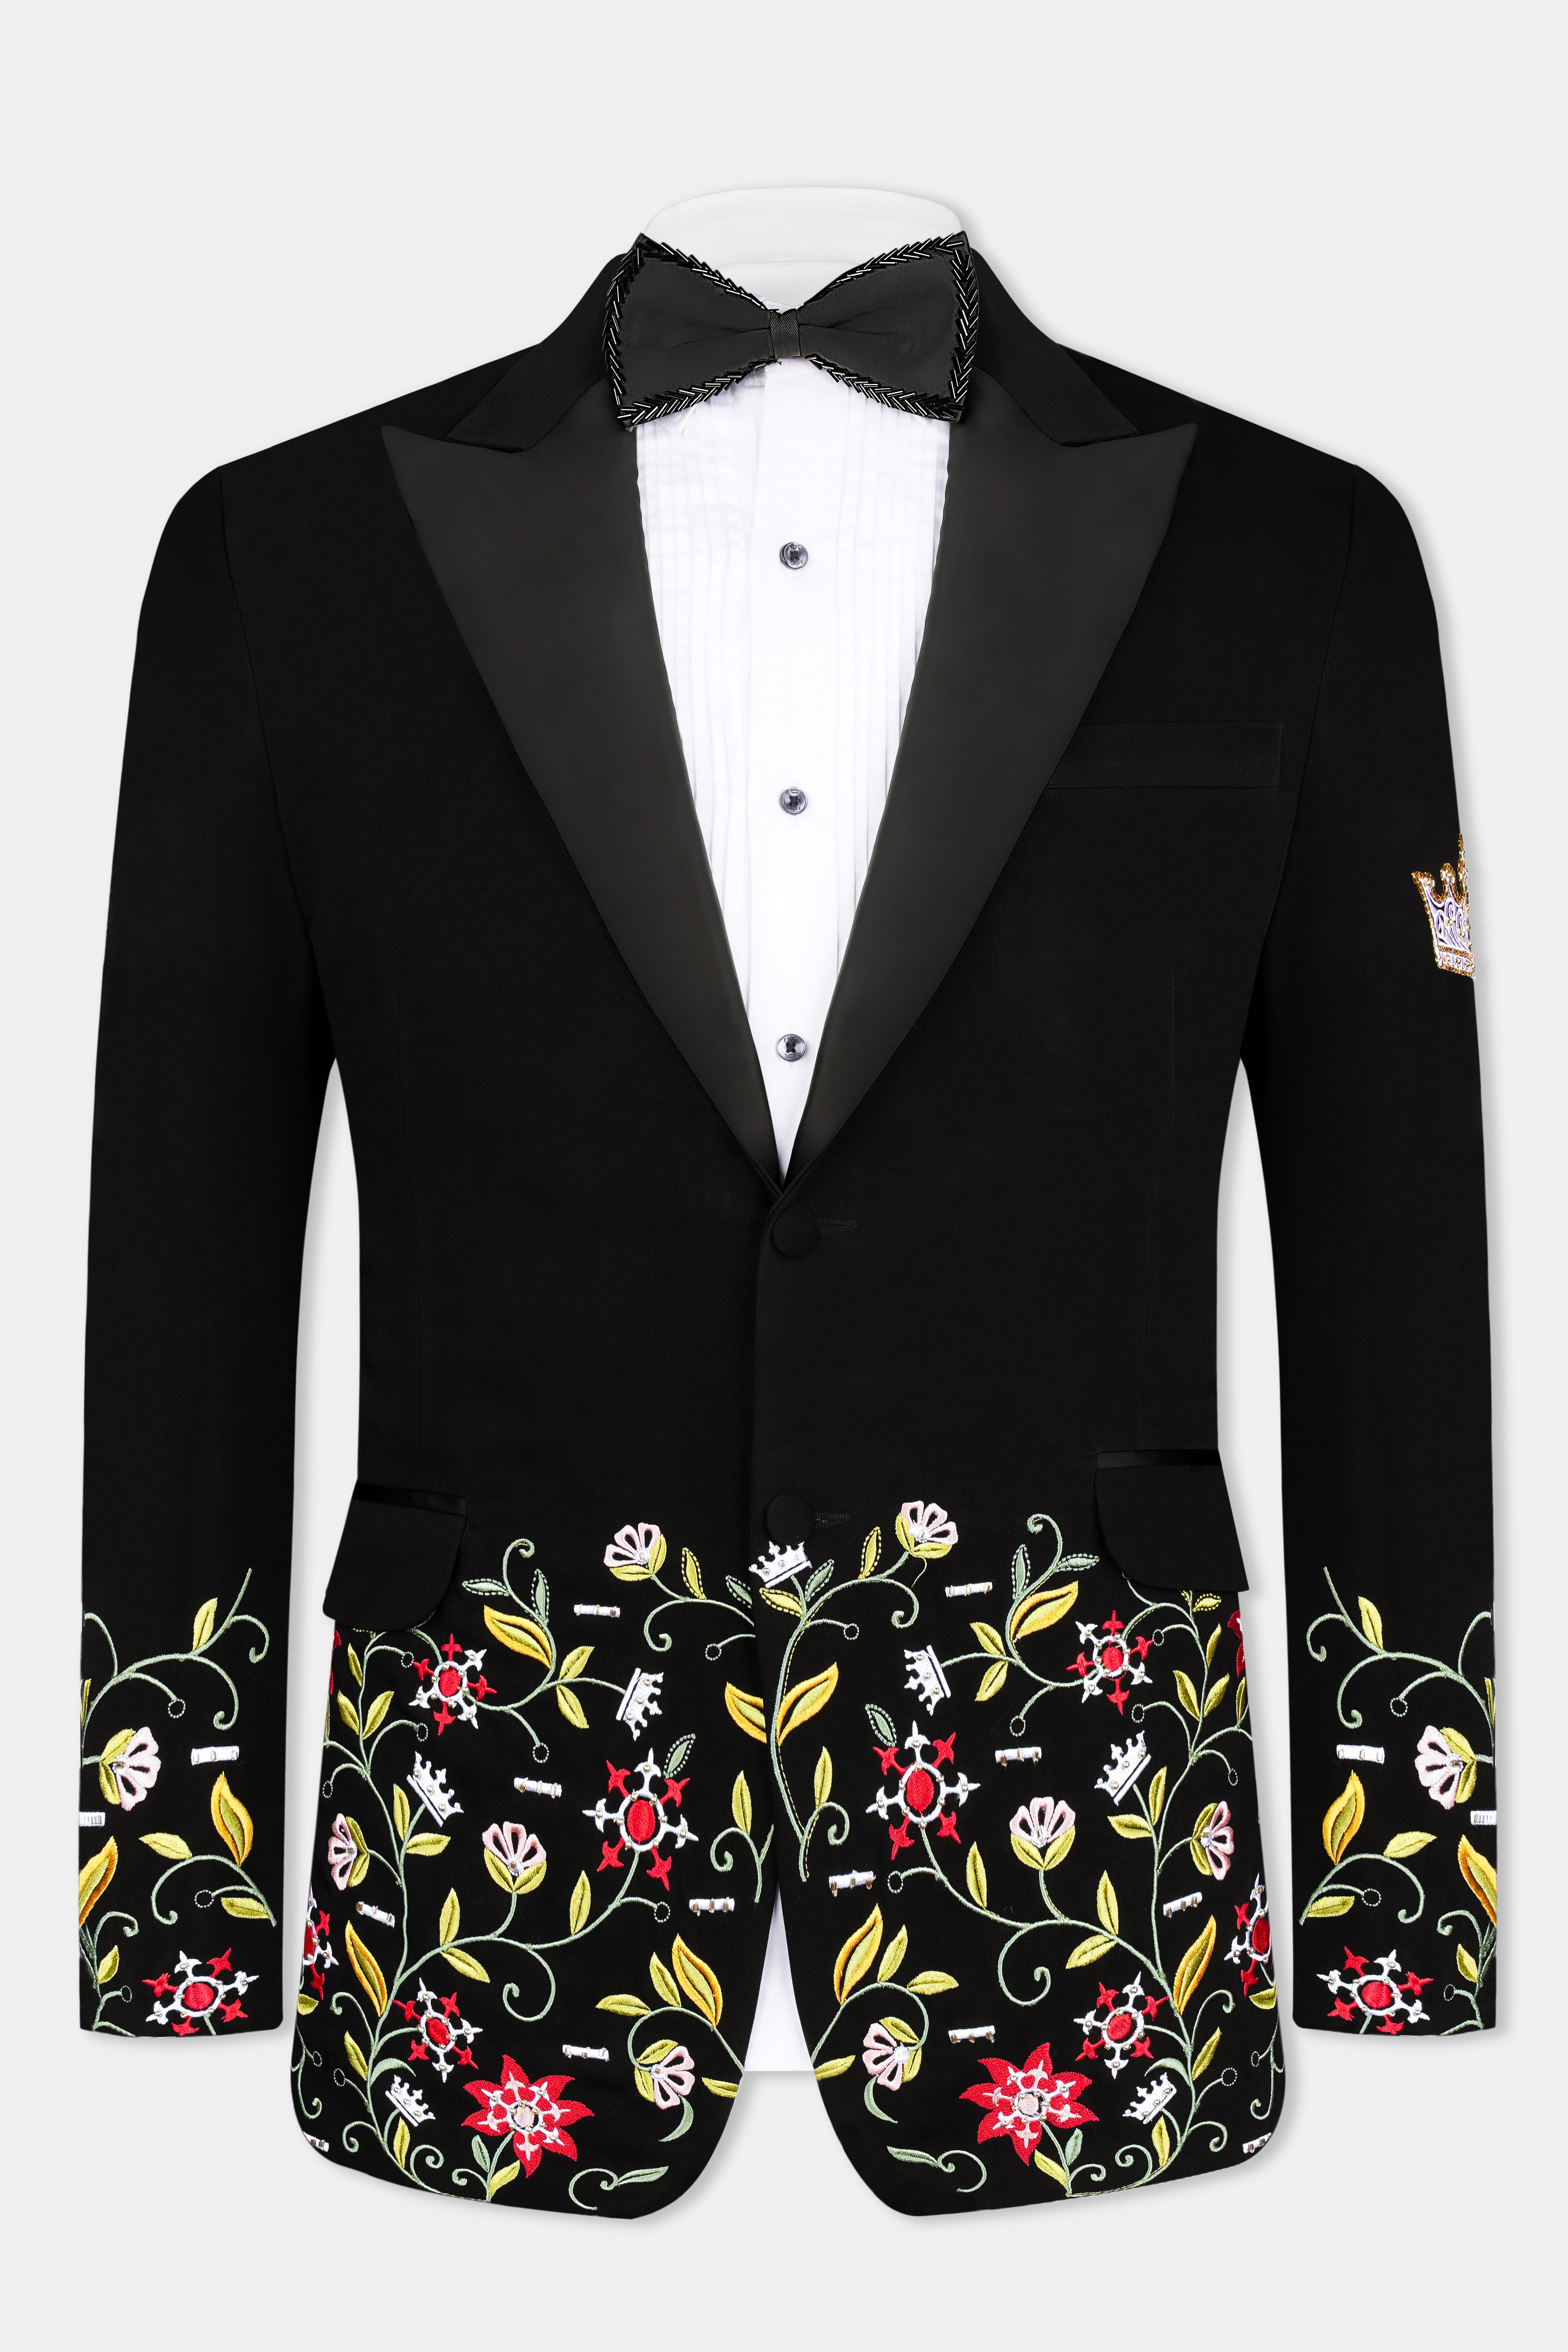 Korean Black (The Best Black We Have) Floral Embroidered Wool Rich Designer Tuxedo Blazer